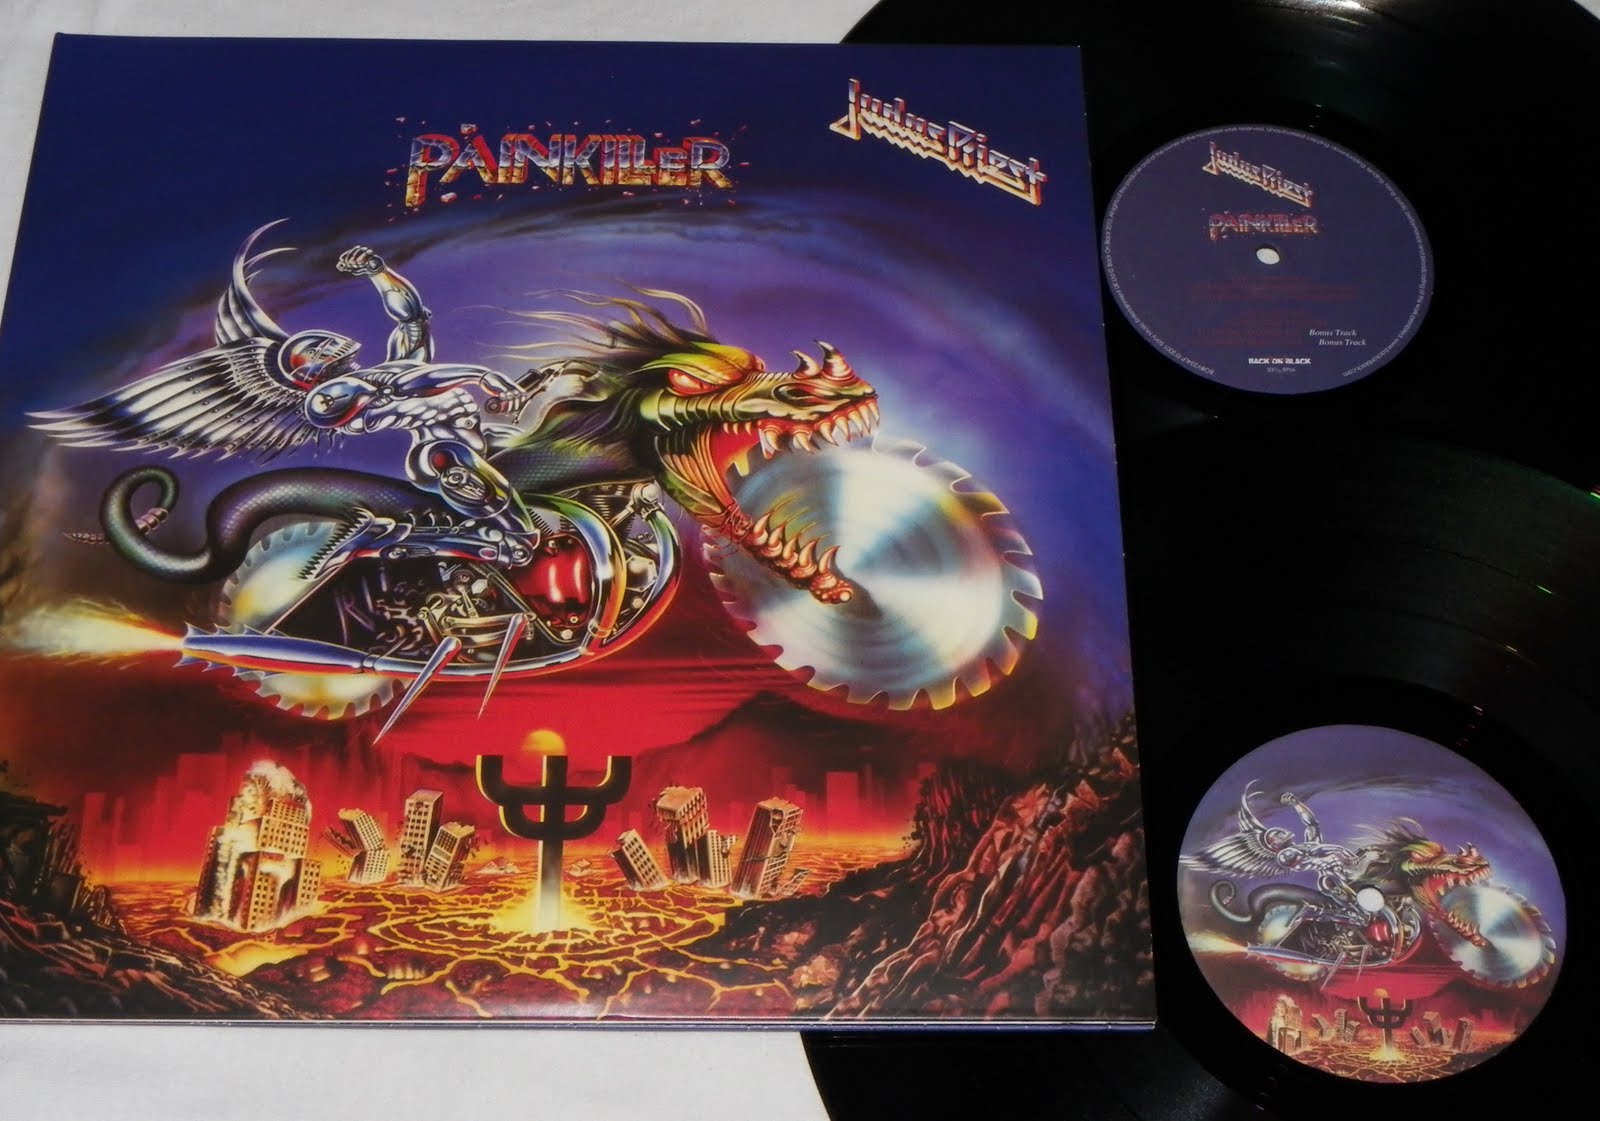 Invincible shield judas priest альбомы. Judas Priest Painkiller 1990. Judas Priest Painkiller обложка. Judas Priest Painkiller 1990 Tour. Judas Priest 1990 Painkiller обложка альбома.